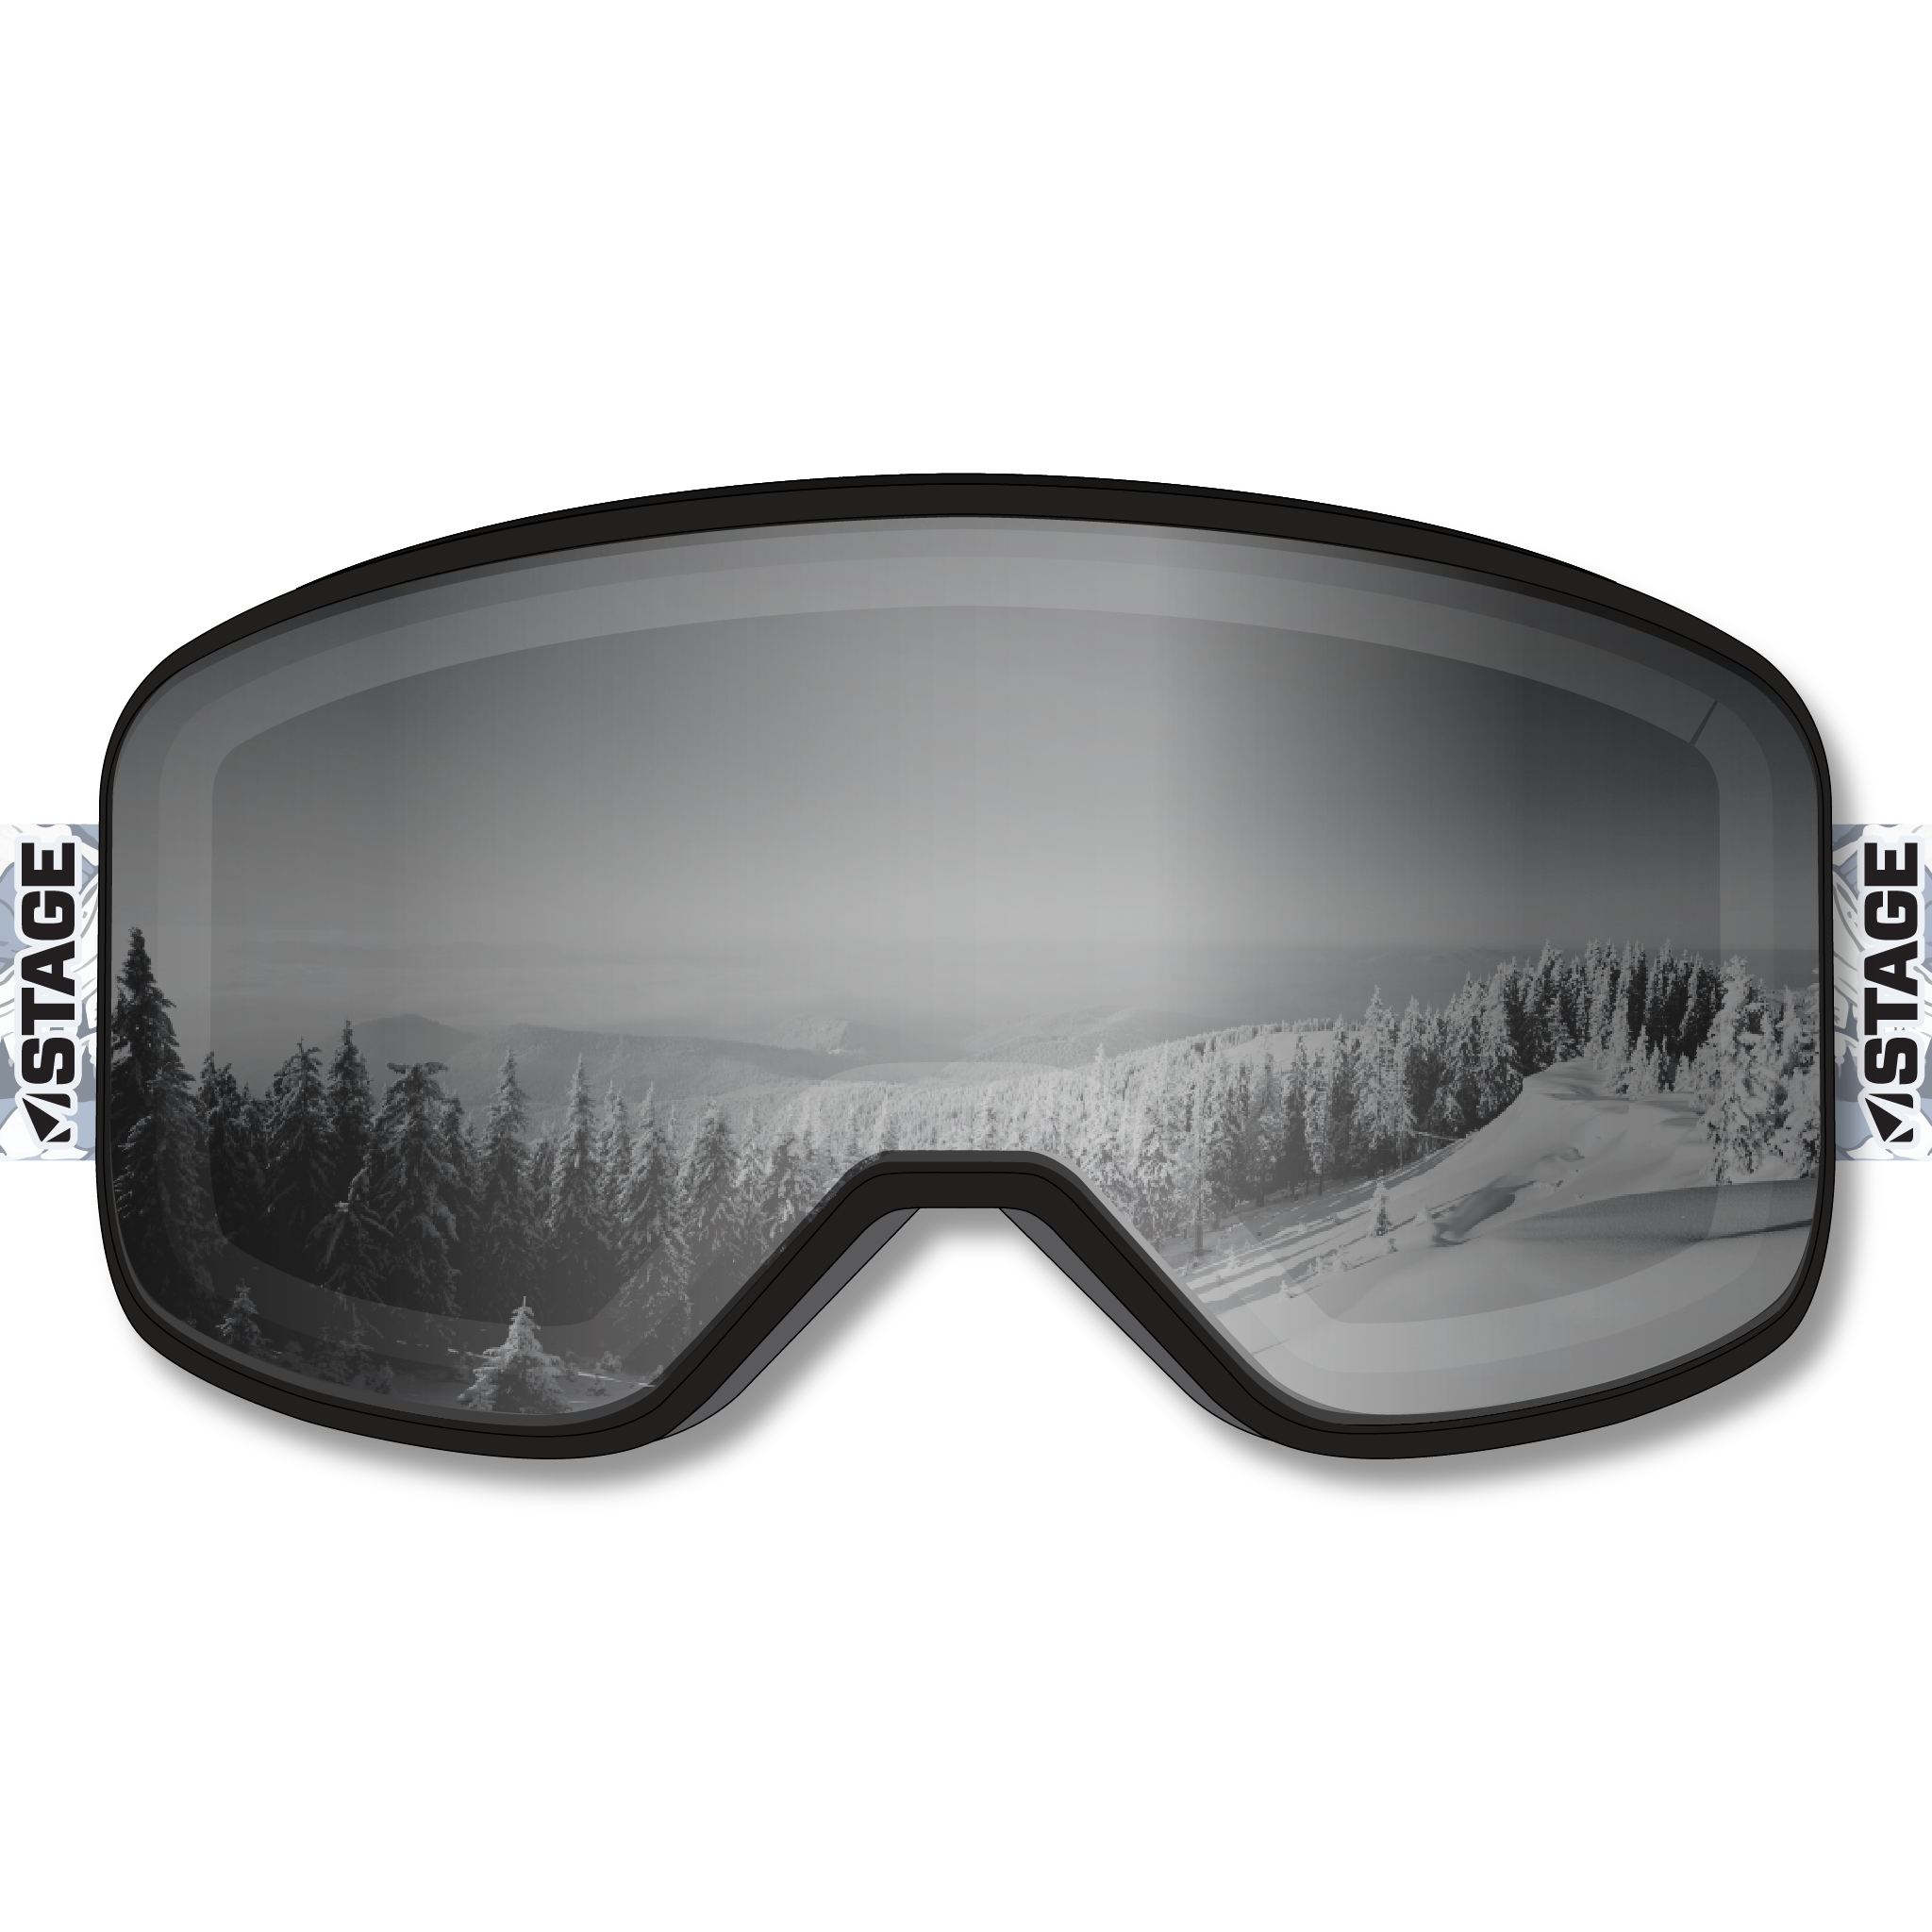 Wasatch Adaptive Sports Prop Ski Goggle - Black Frame w/ Mirror Chrome Lens - Adult Universal